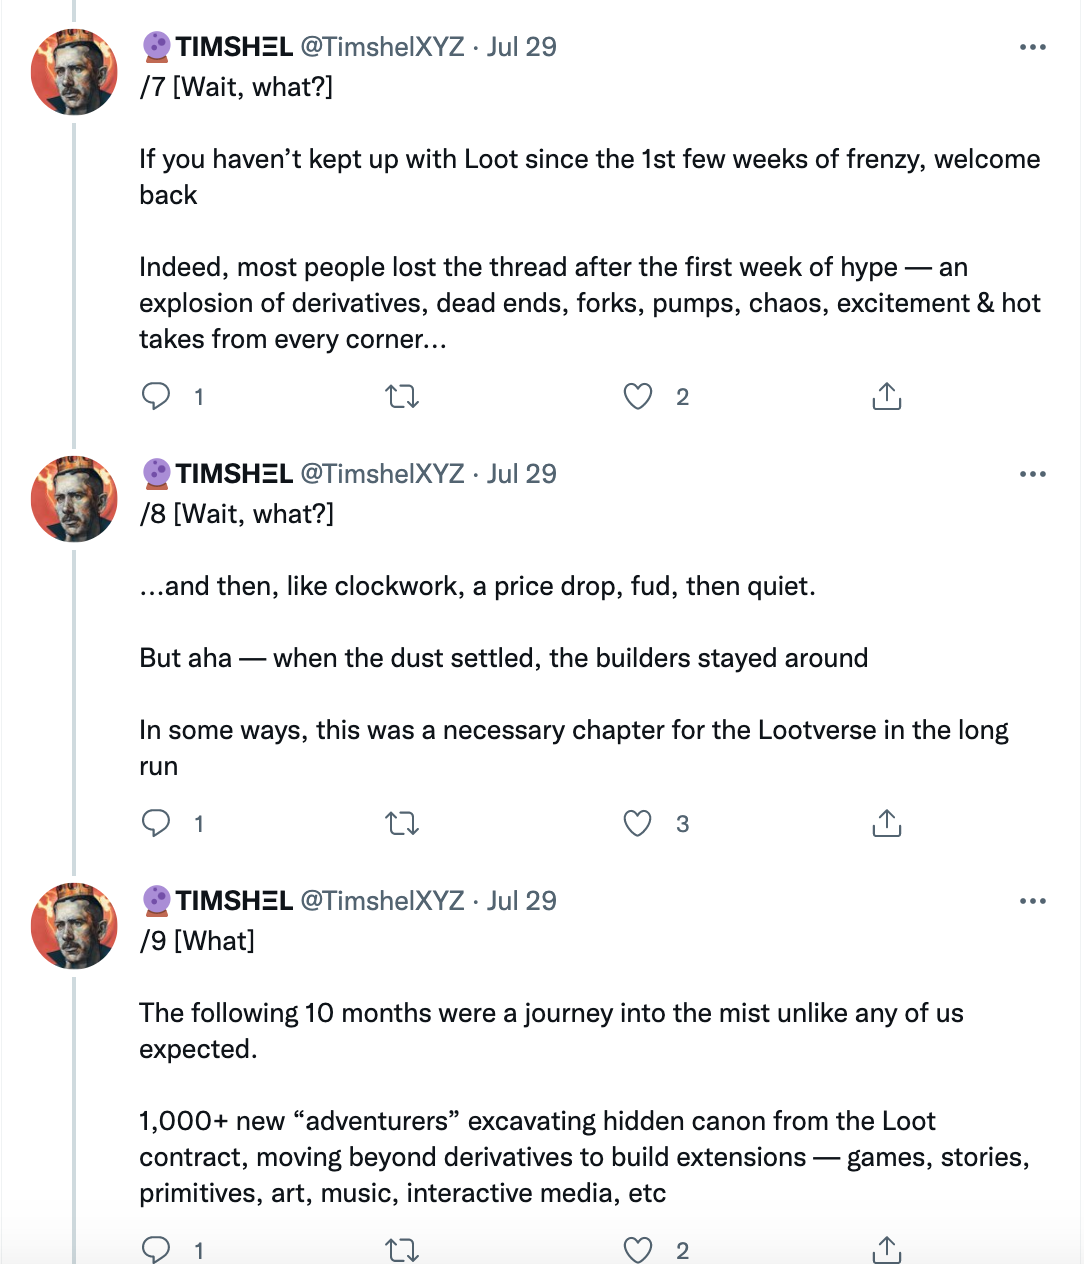 An excerpt from Timshel's overview on the Lootverse, via https://twitter.com/TimshelXYZ/status/1553072711529730049 